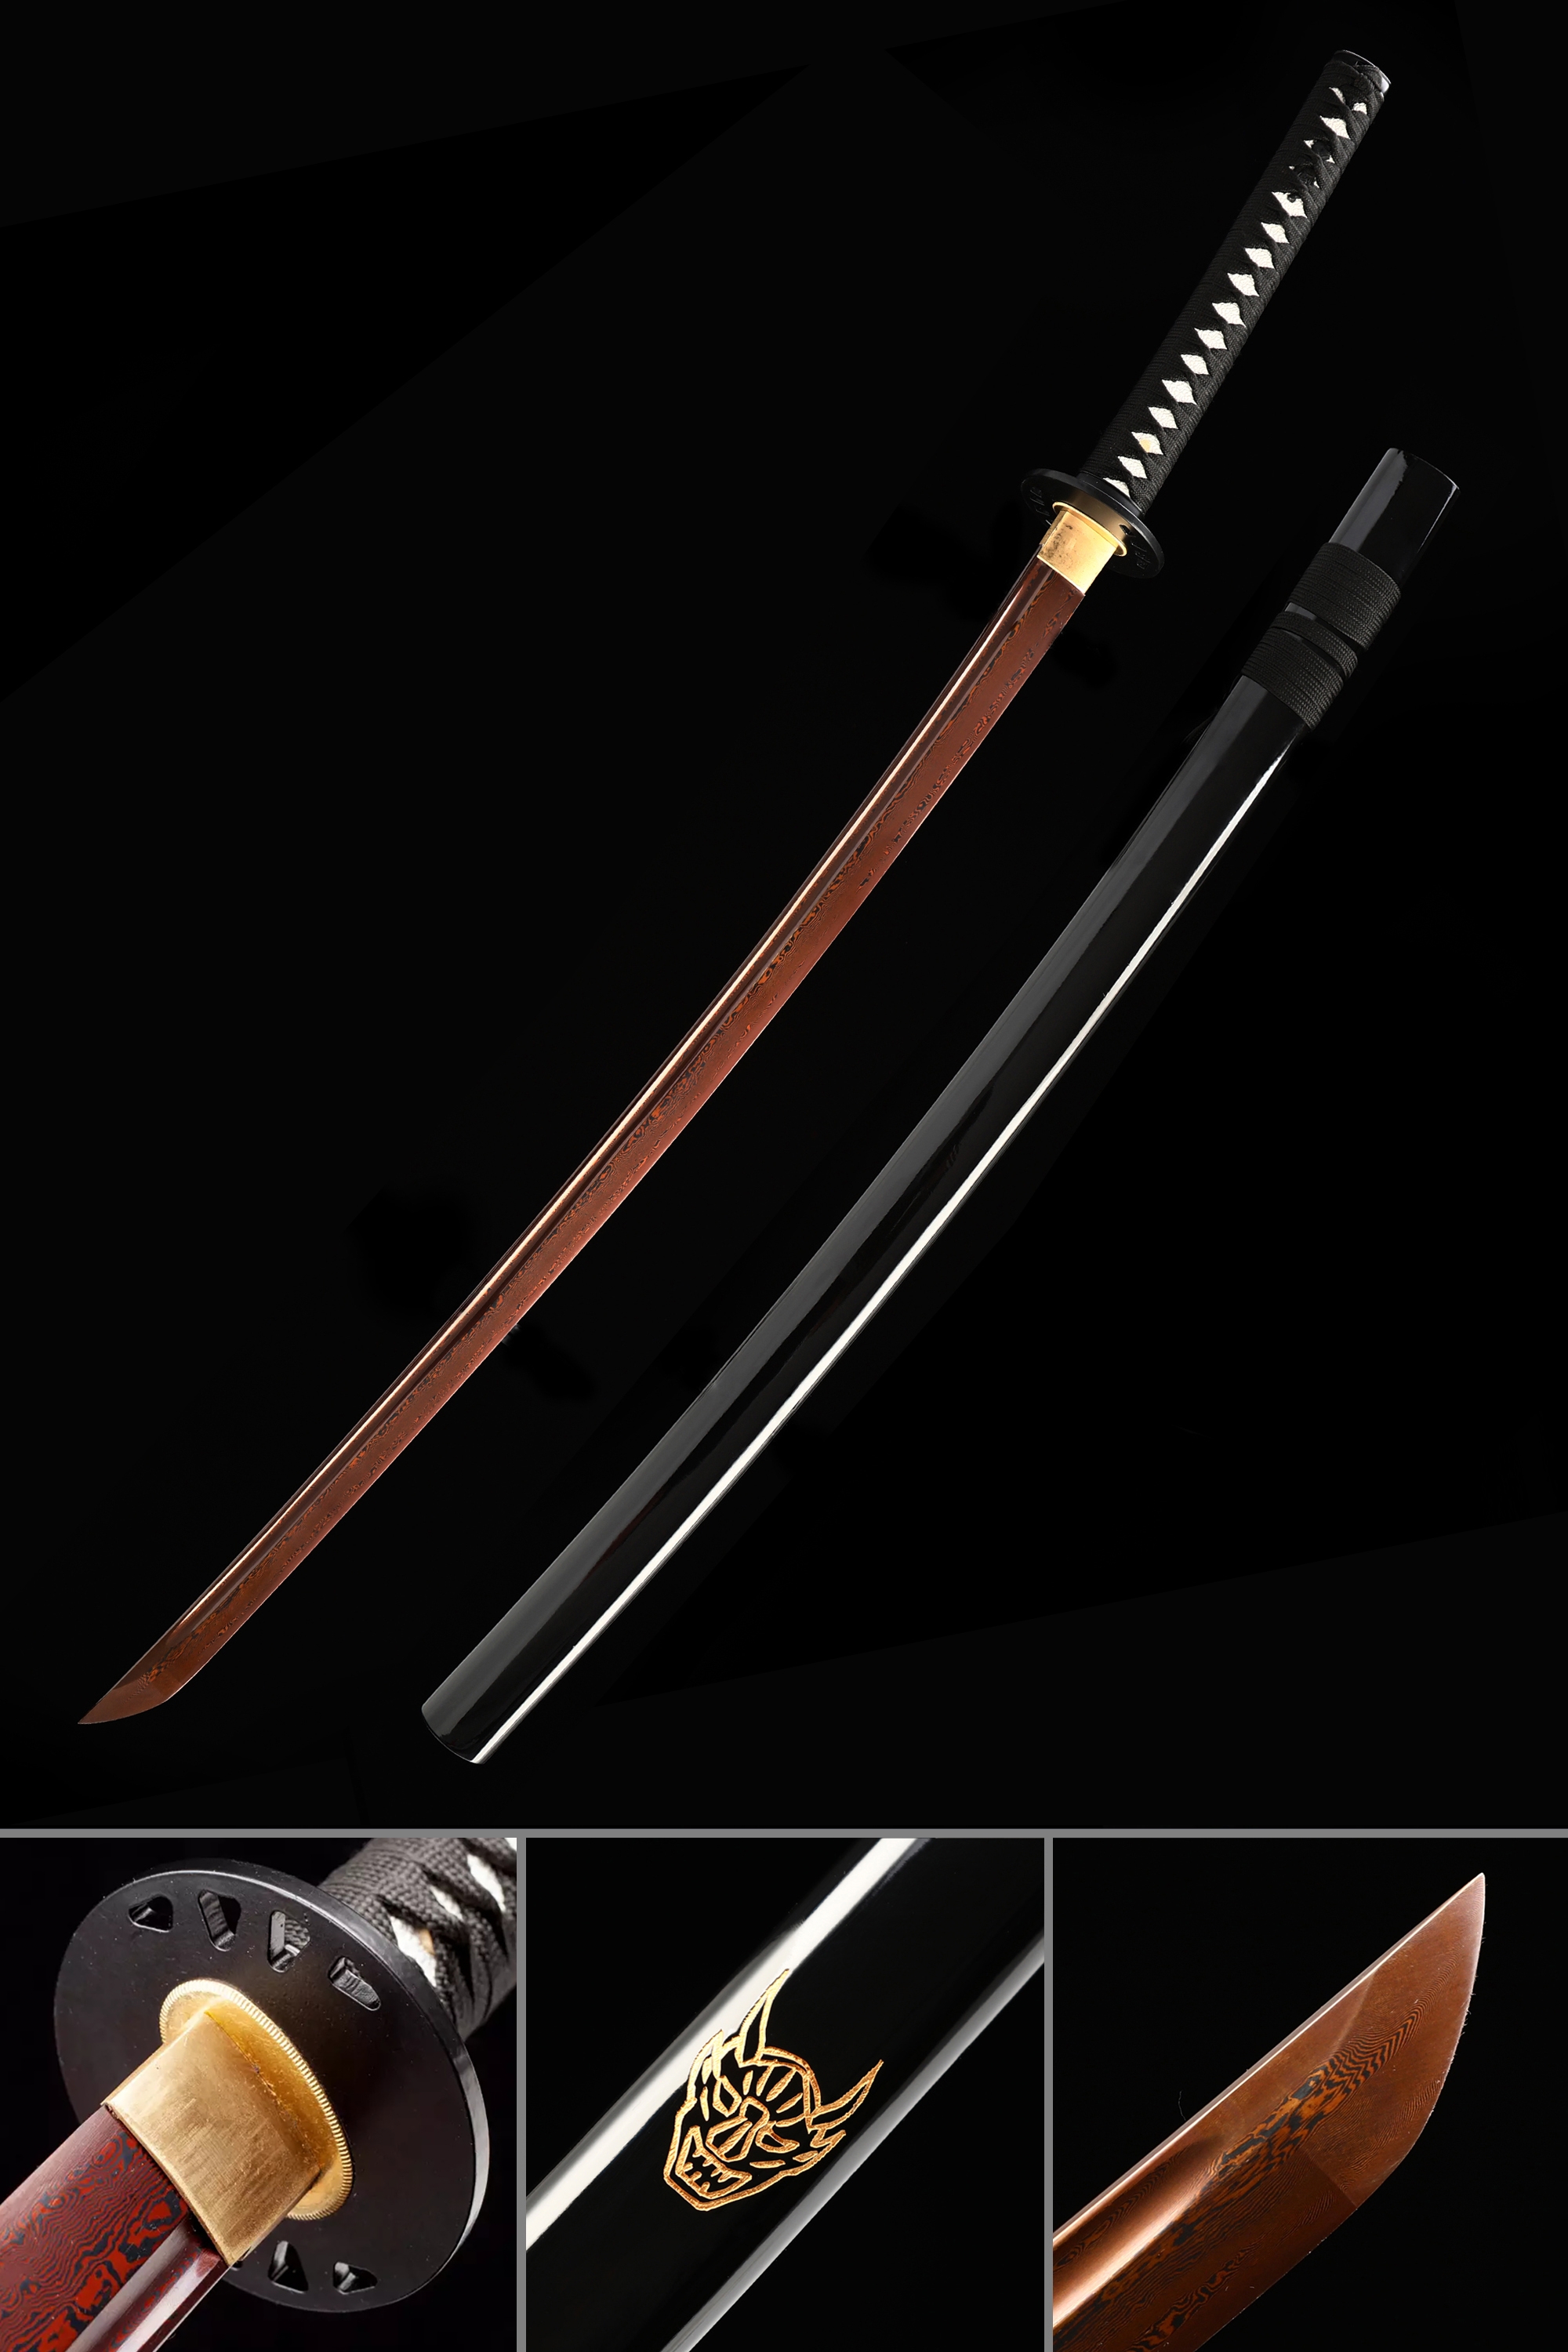 39" Kill Bill Demon's Japanese Samurai Katana Sword with Stand Brand New 